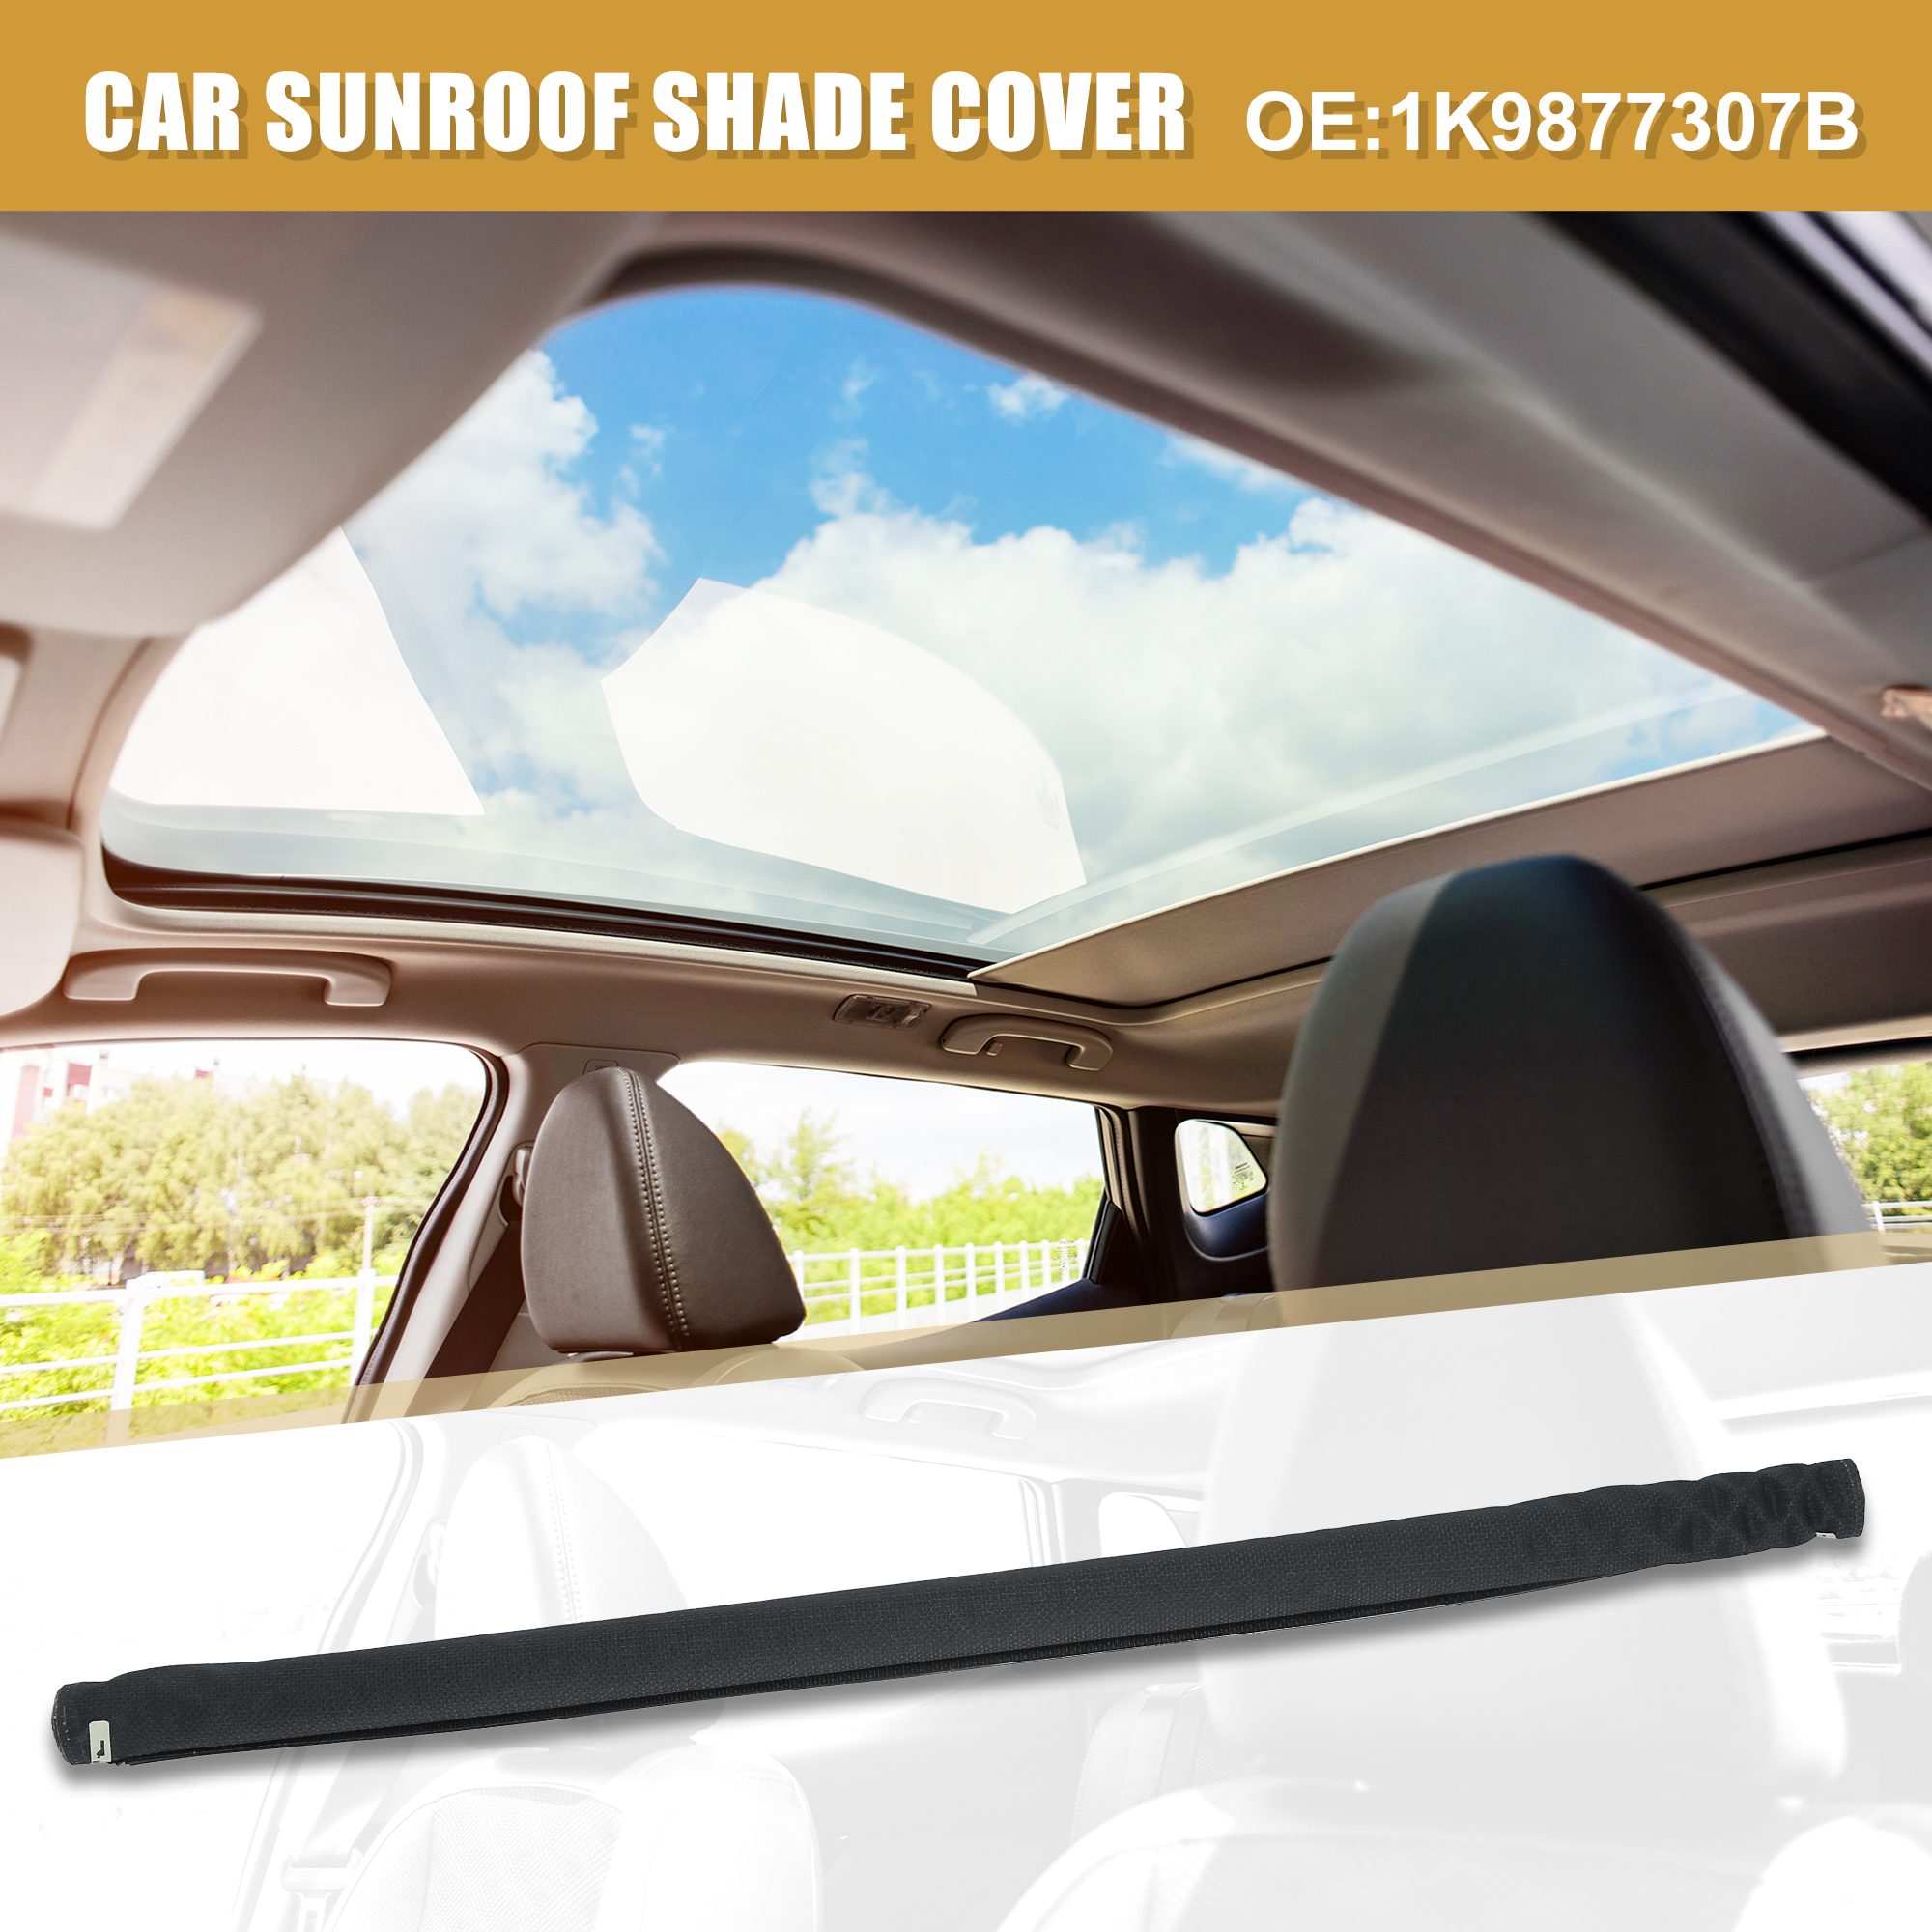 Unique Bargains Car Cloth Sunroof Shade Cover Corn 1K9877307B for Volkswagen Q5 Black 1 Pcs